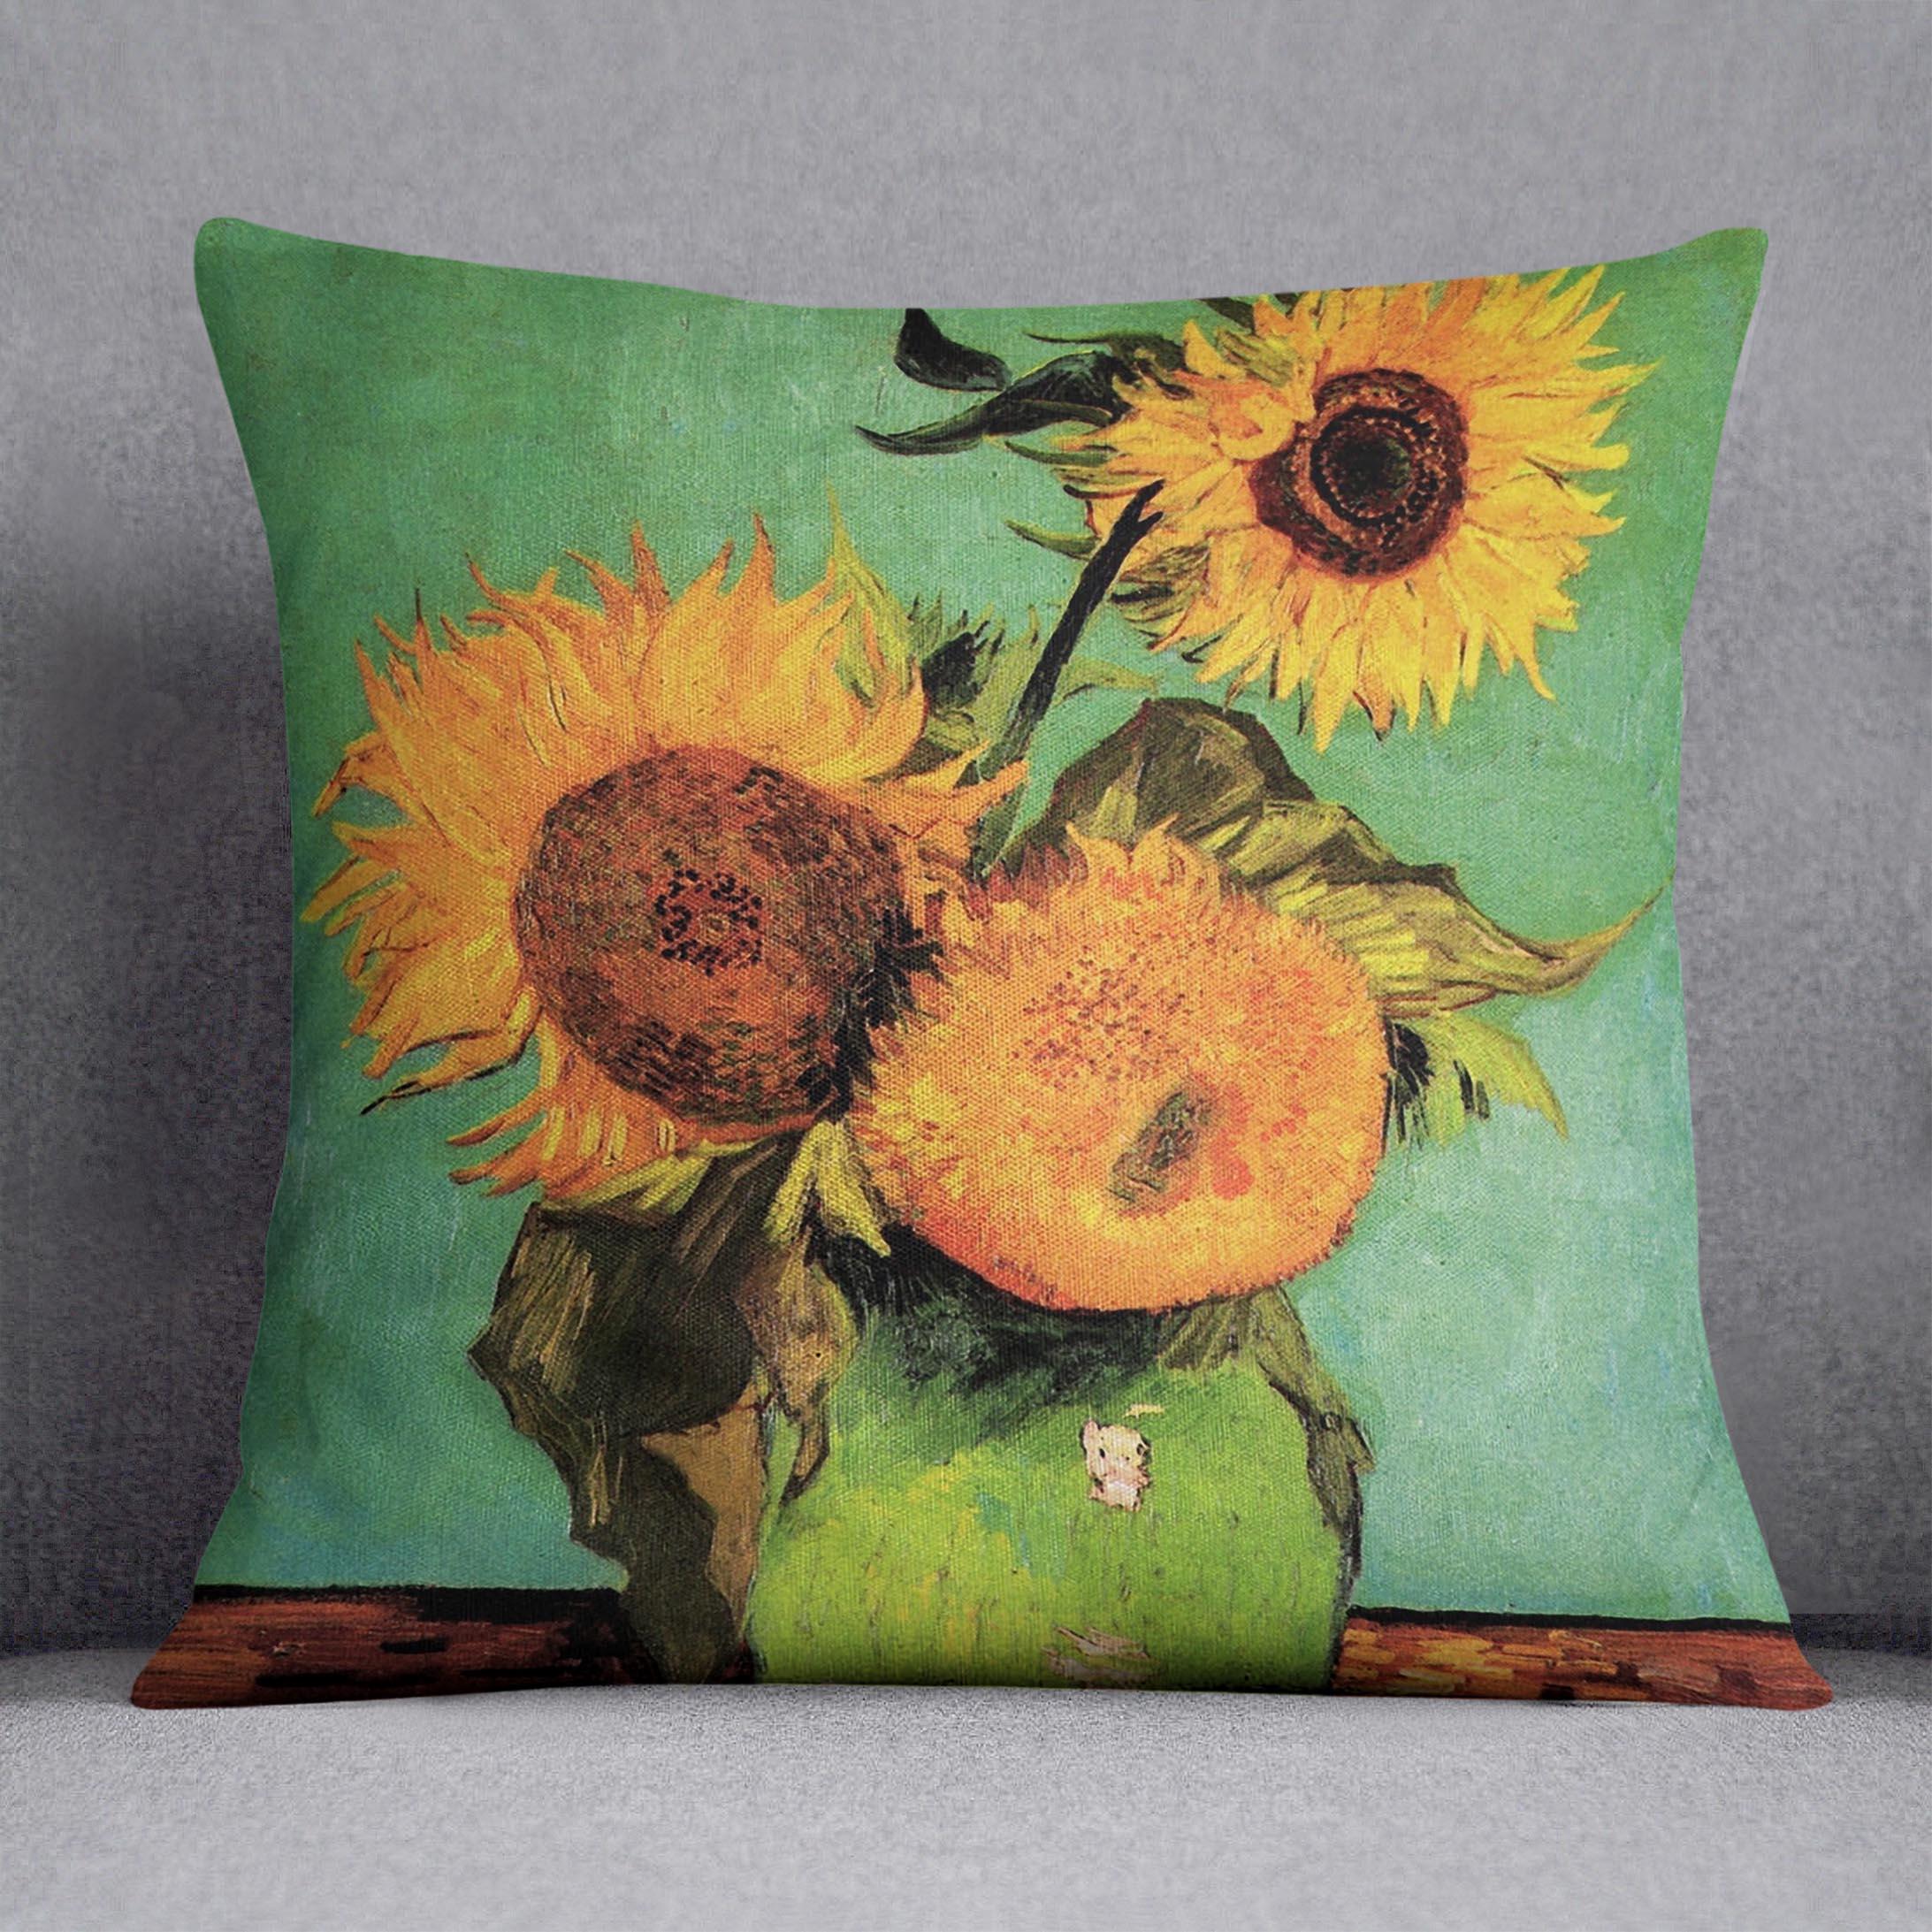 Three Sunflowers in a Vase by Van Gogh Cushion